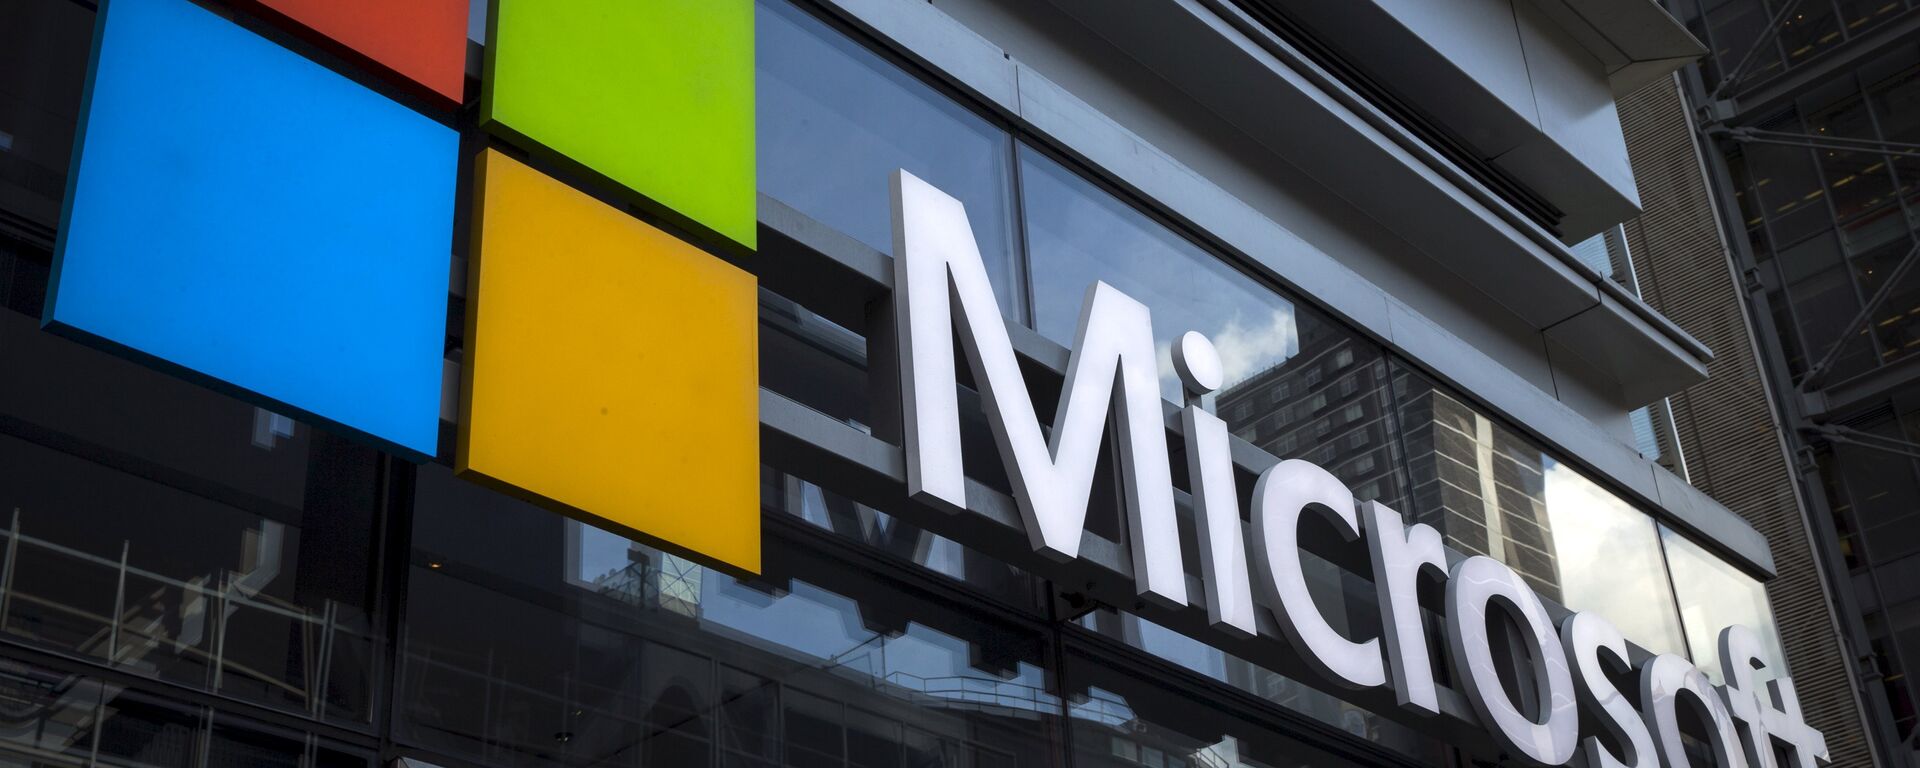 A Microsoft logo is seen on an office building in New York City, July 28, 2015 - Sputnik Mundo, 1920, 24.02.2021